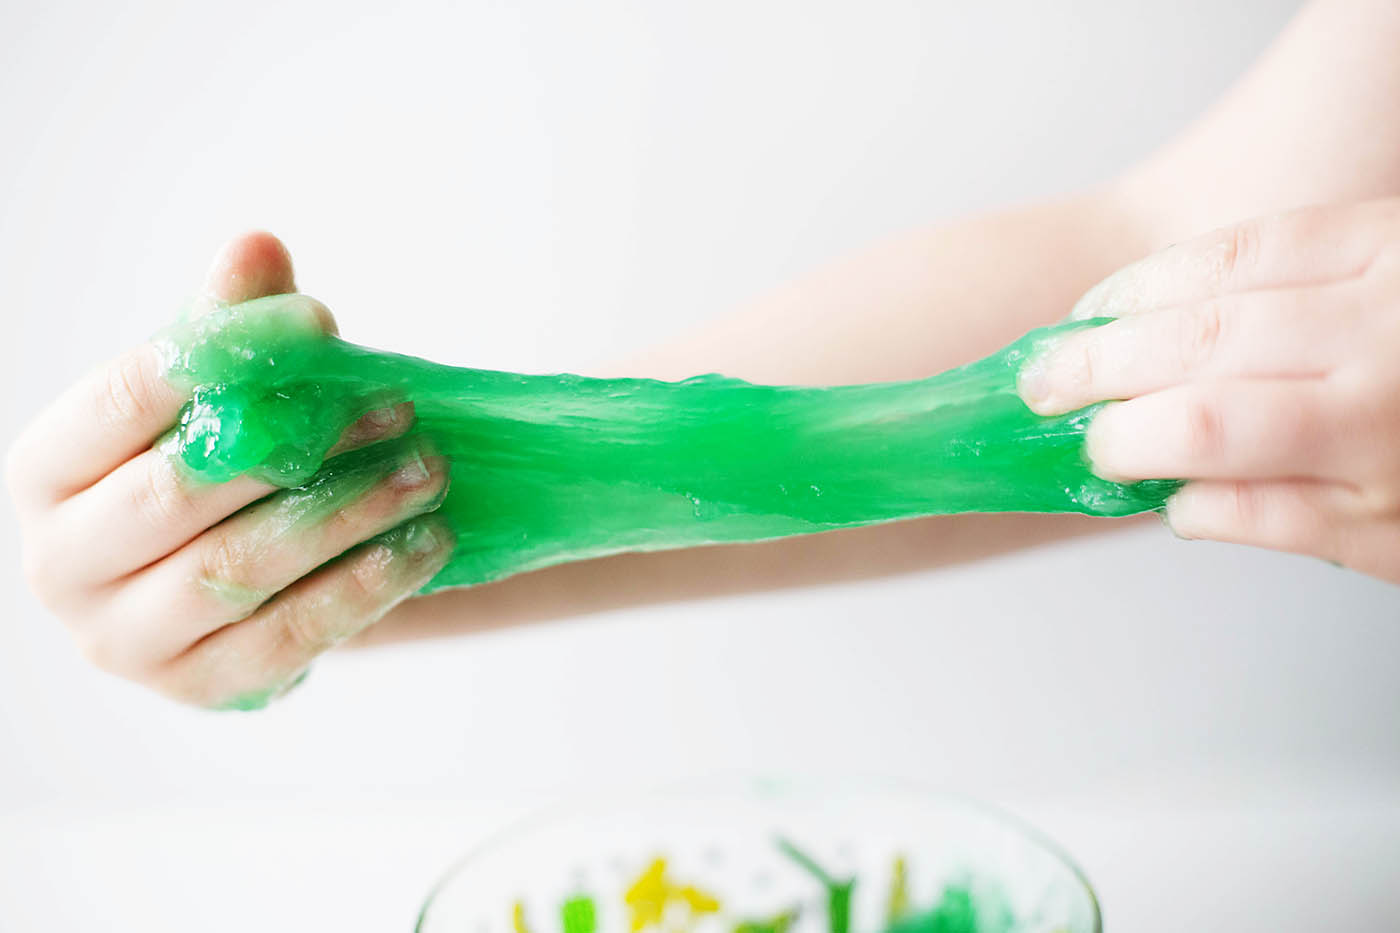 Is Homemade Slime Safe?